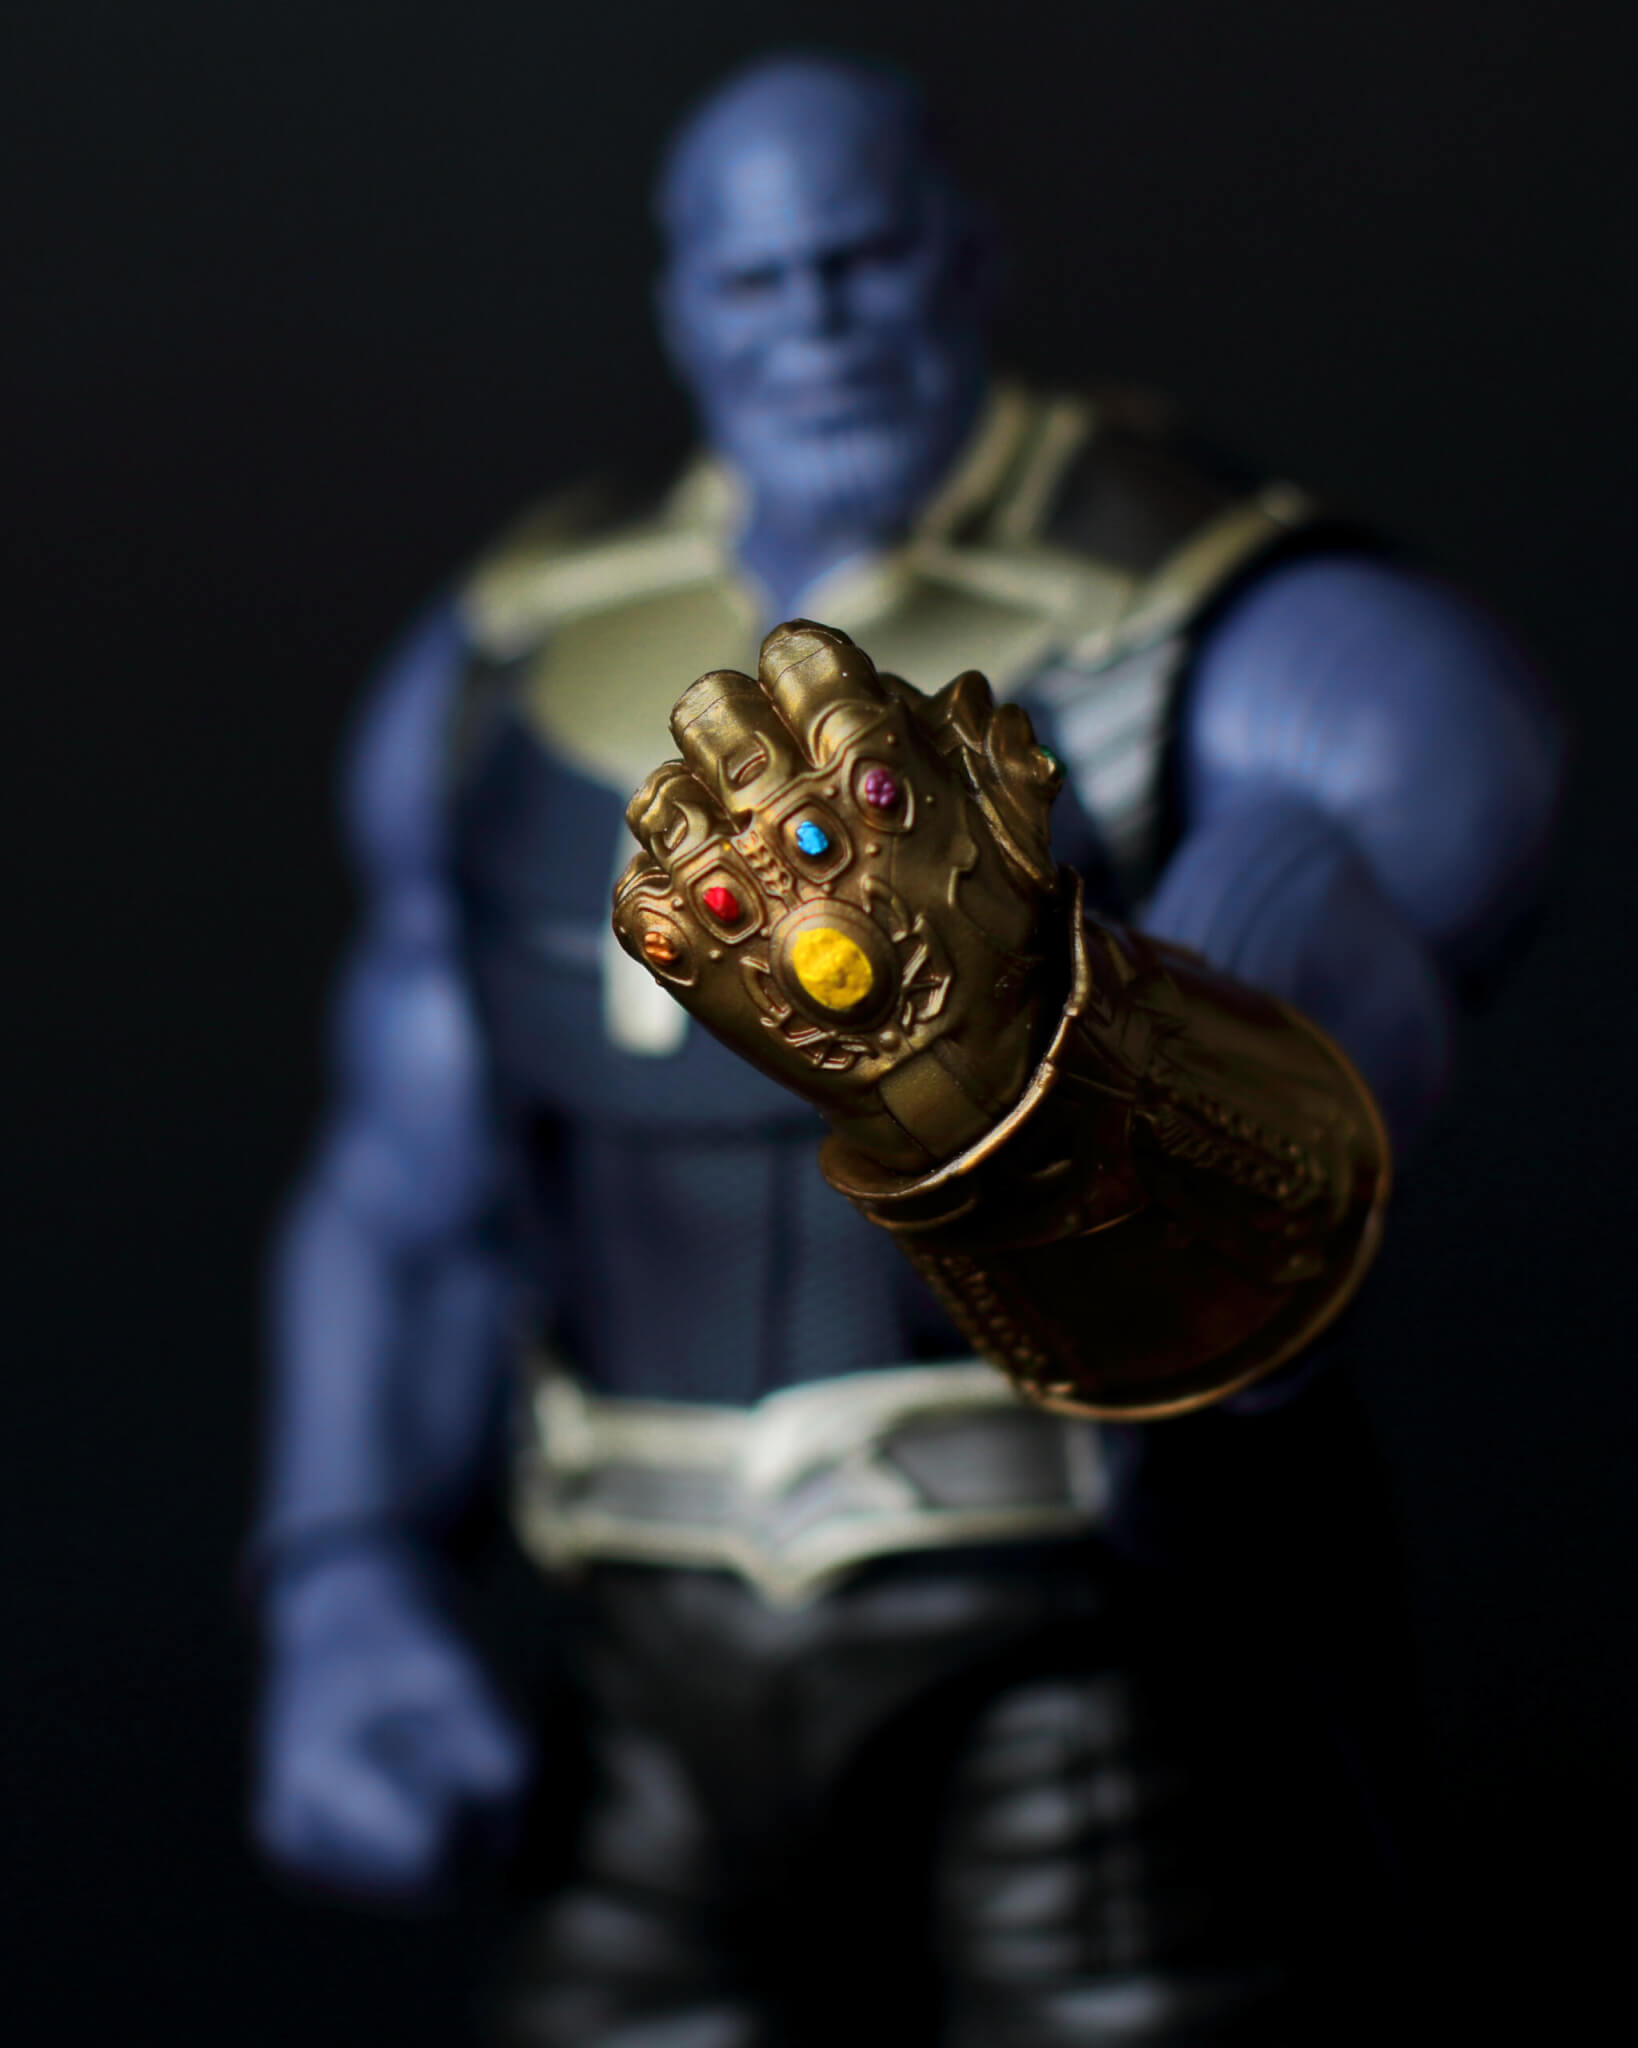 Close up of Thanos' fist